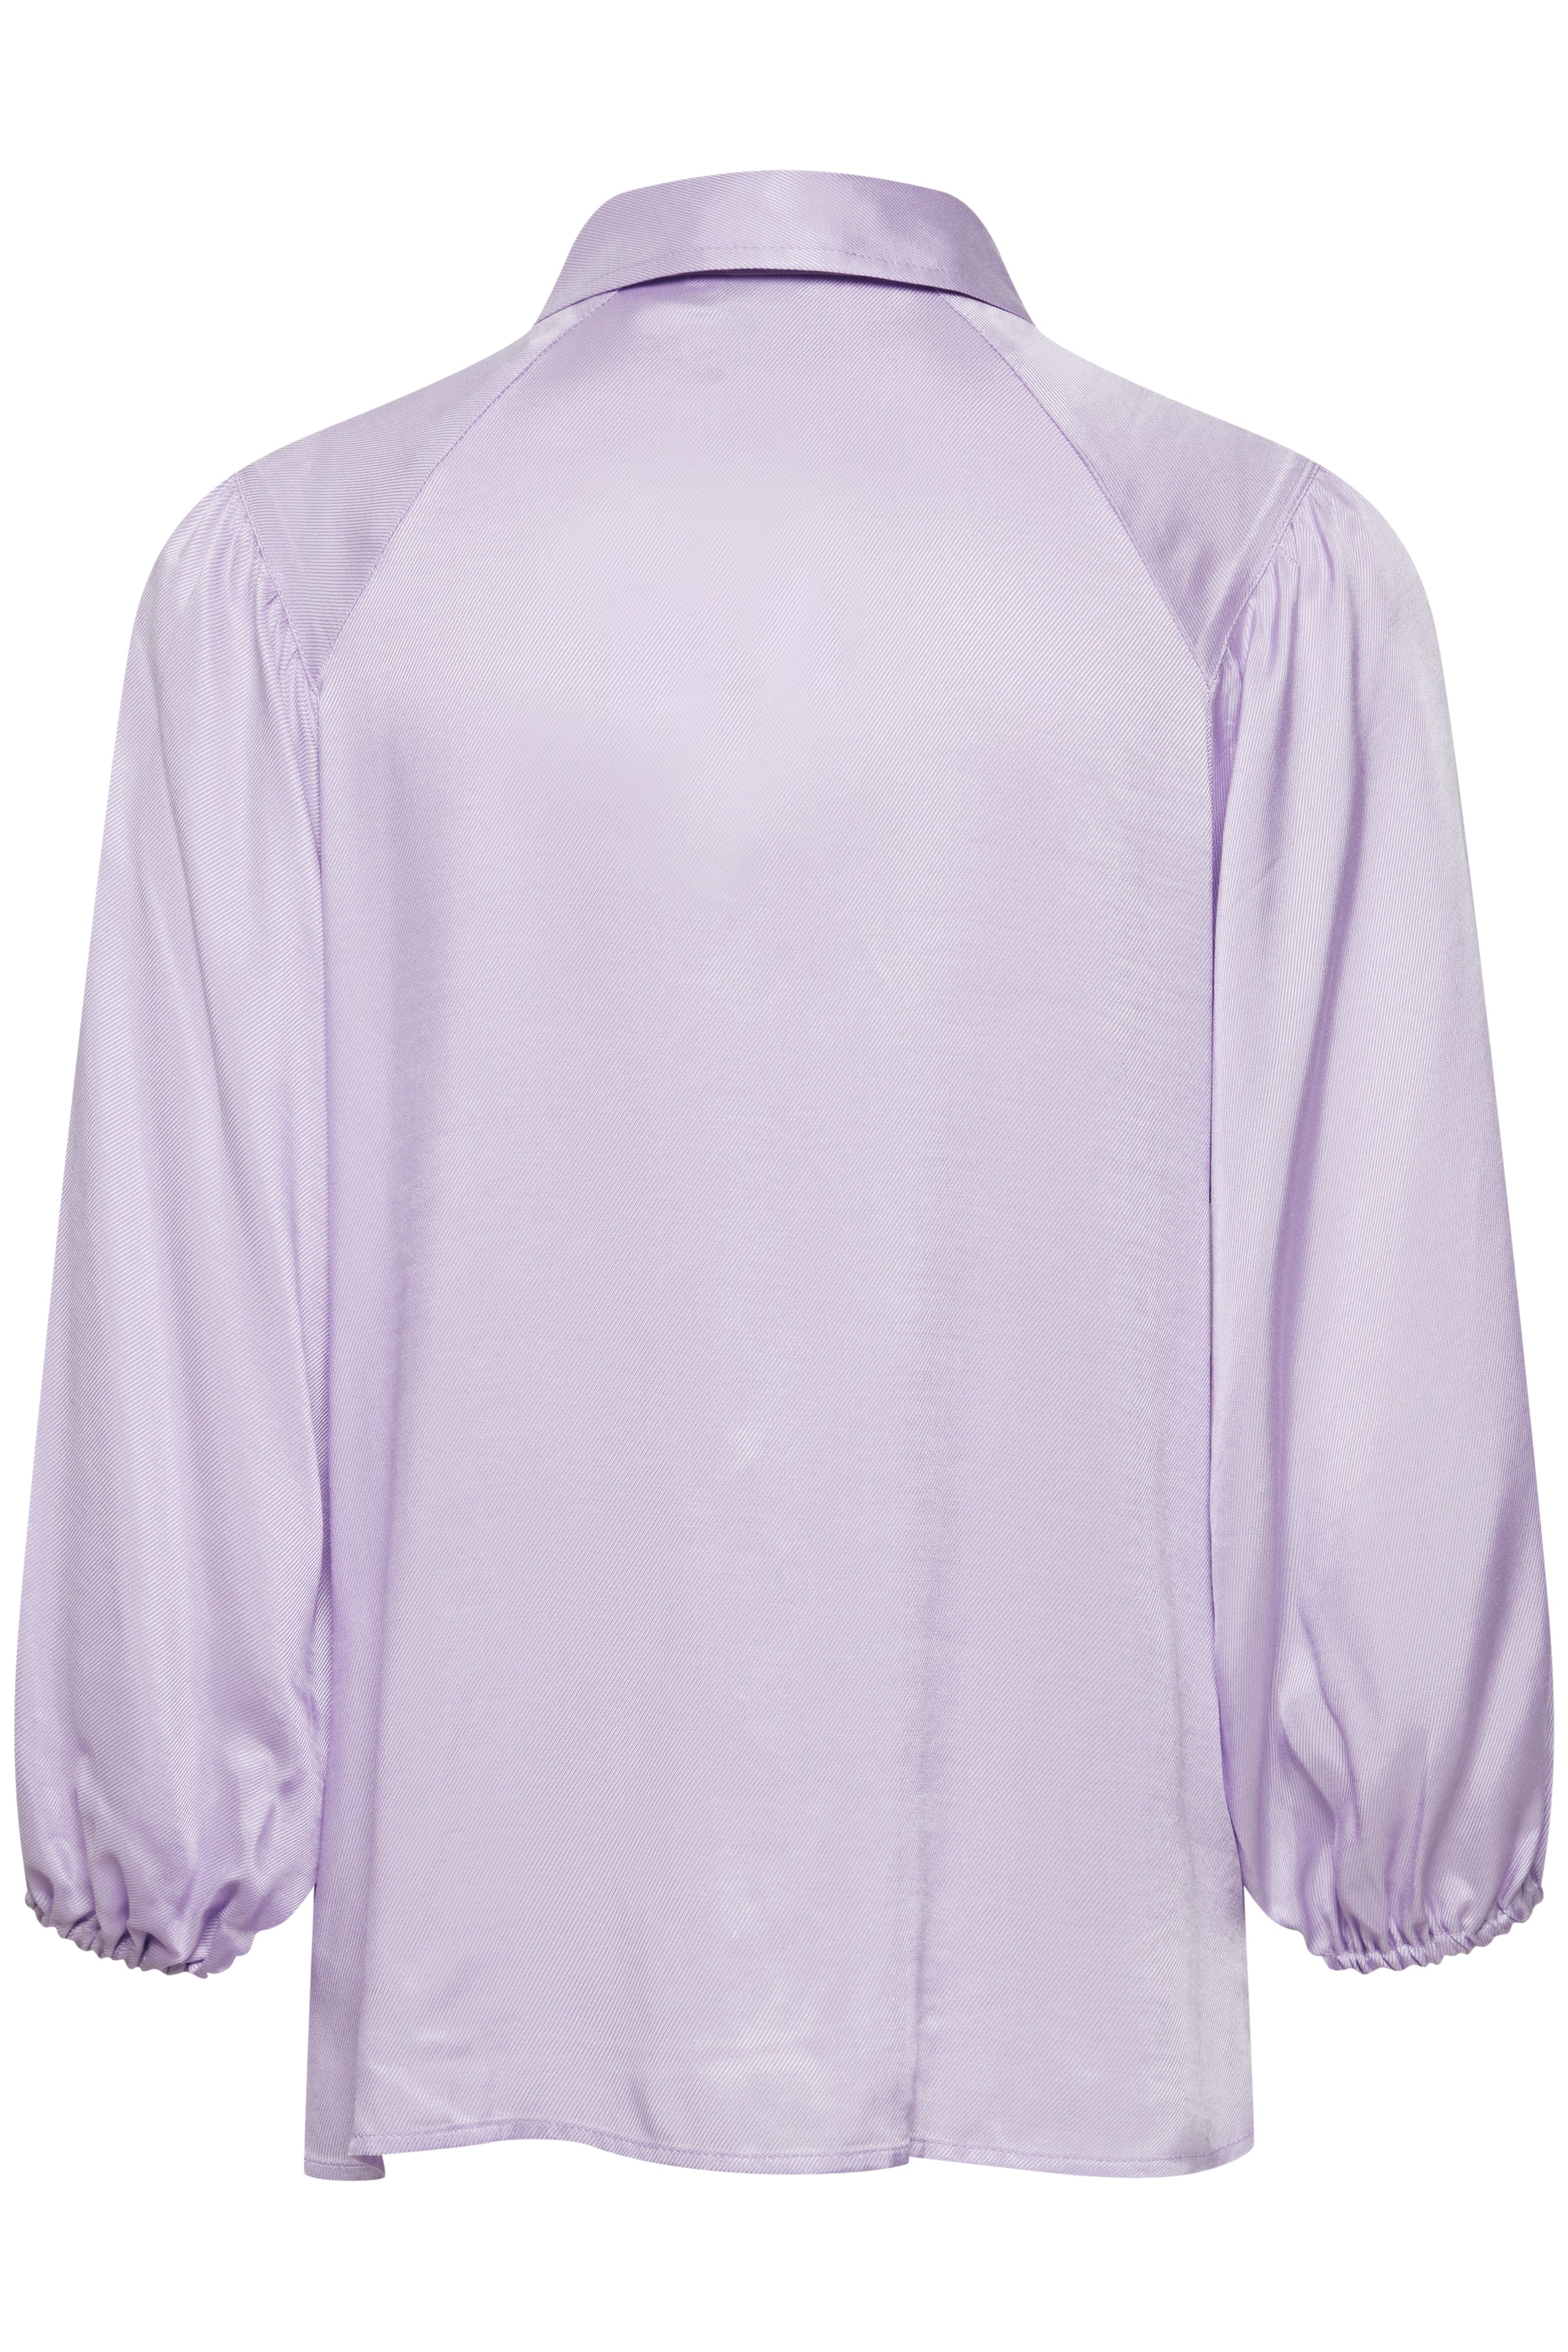 Colorada Shirt Lavender